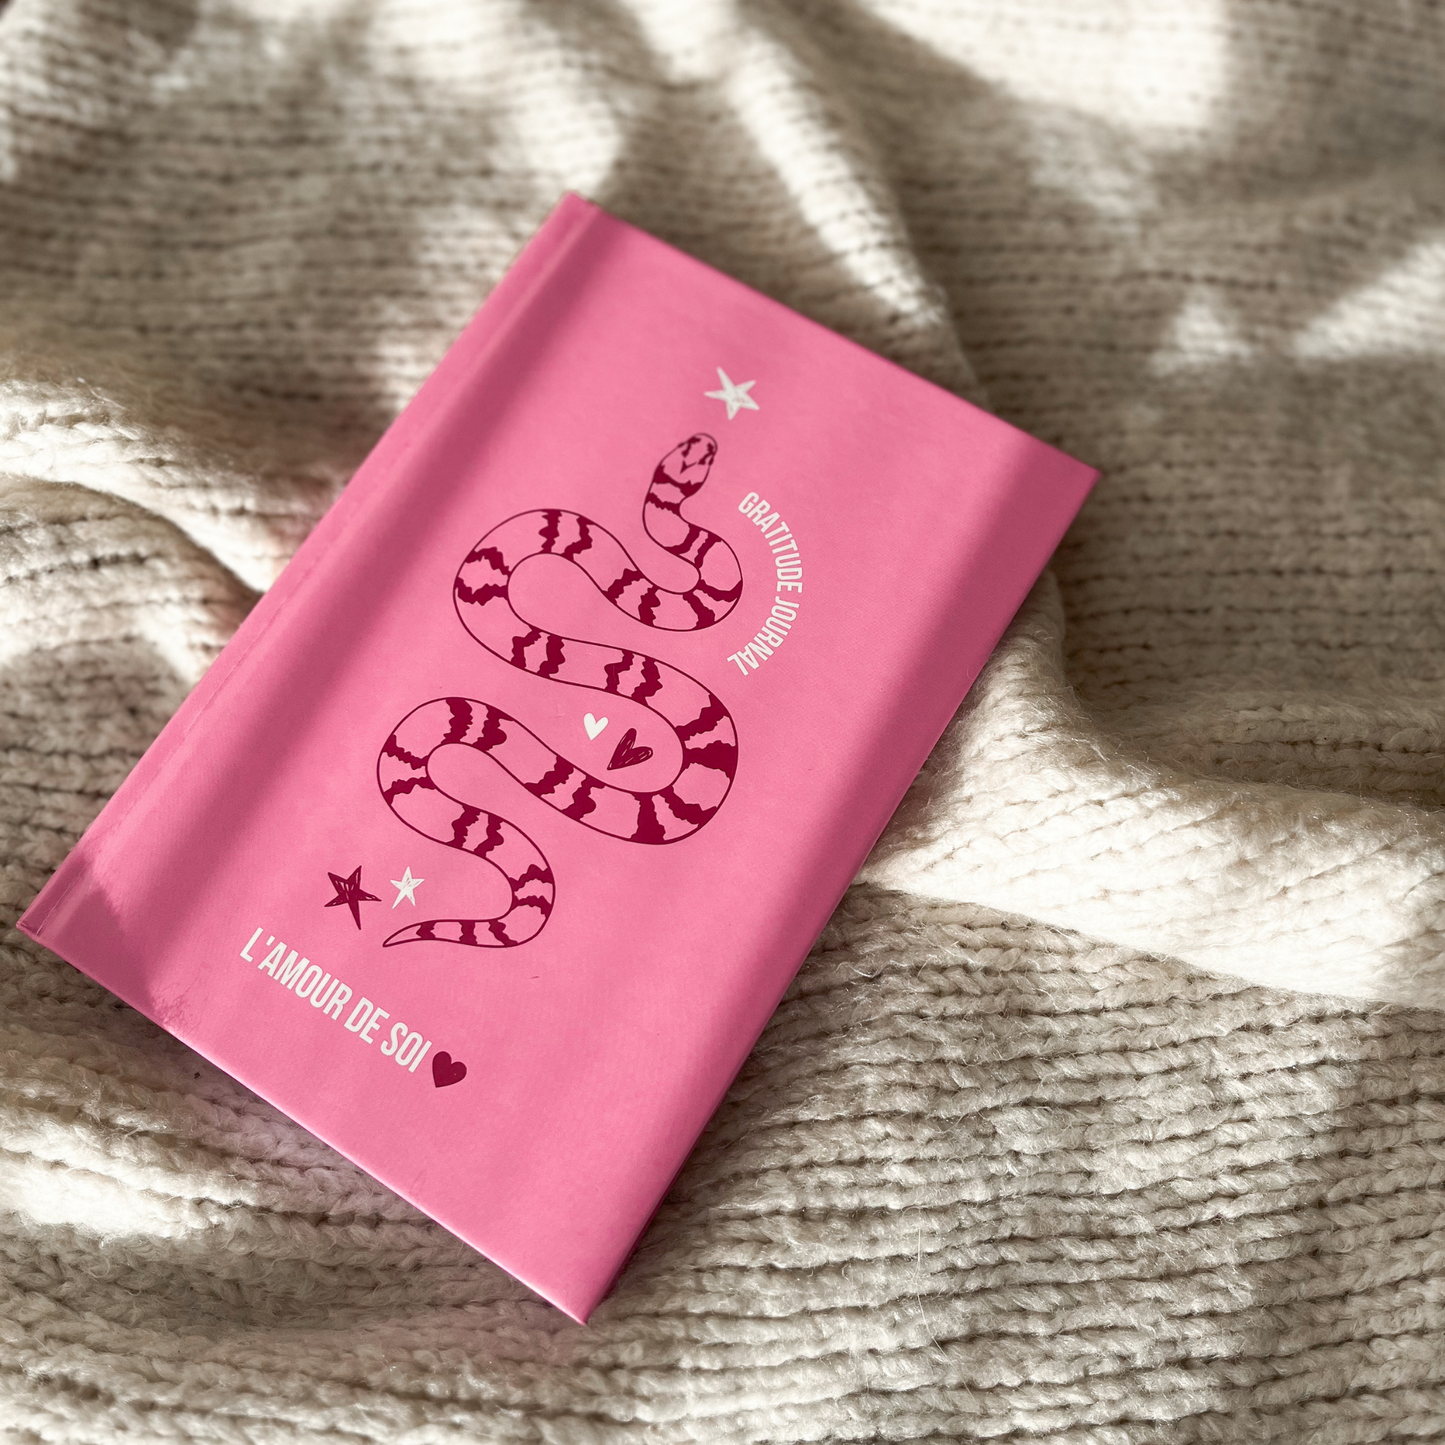 Gratitude journal pink